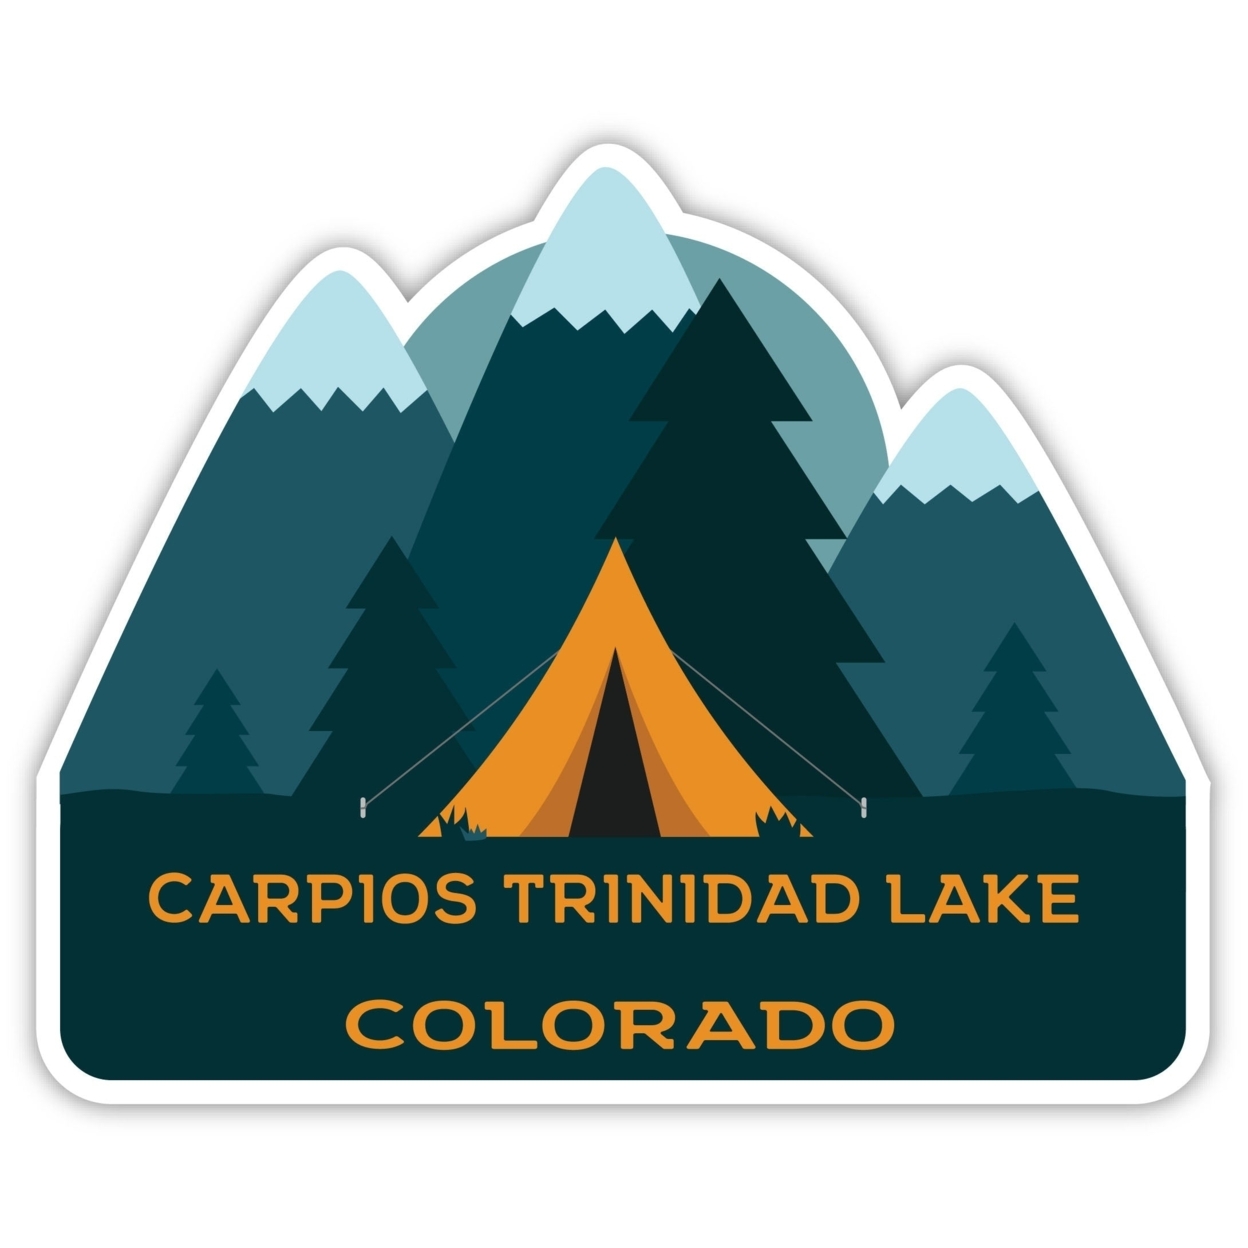 Carpios Trinidad Lake Colorado Souvenir Decorative Stickers (Choose Theme And Size) - Single Unit, 4-Inch, Tent